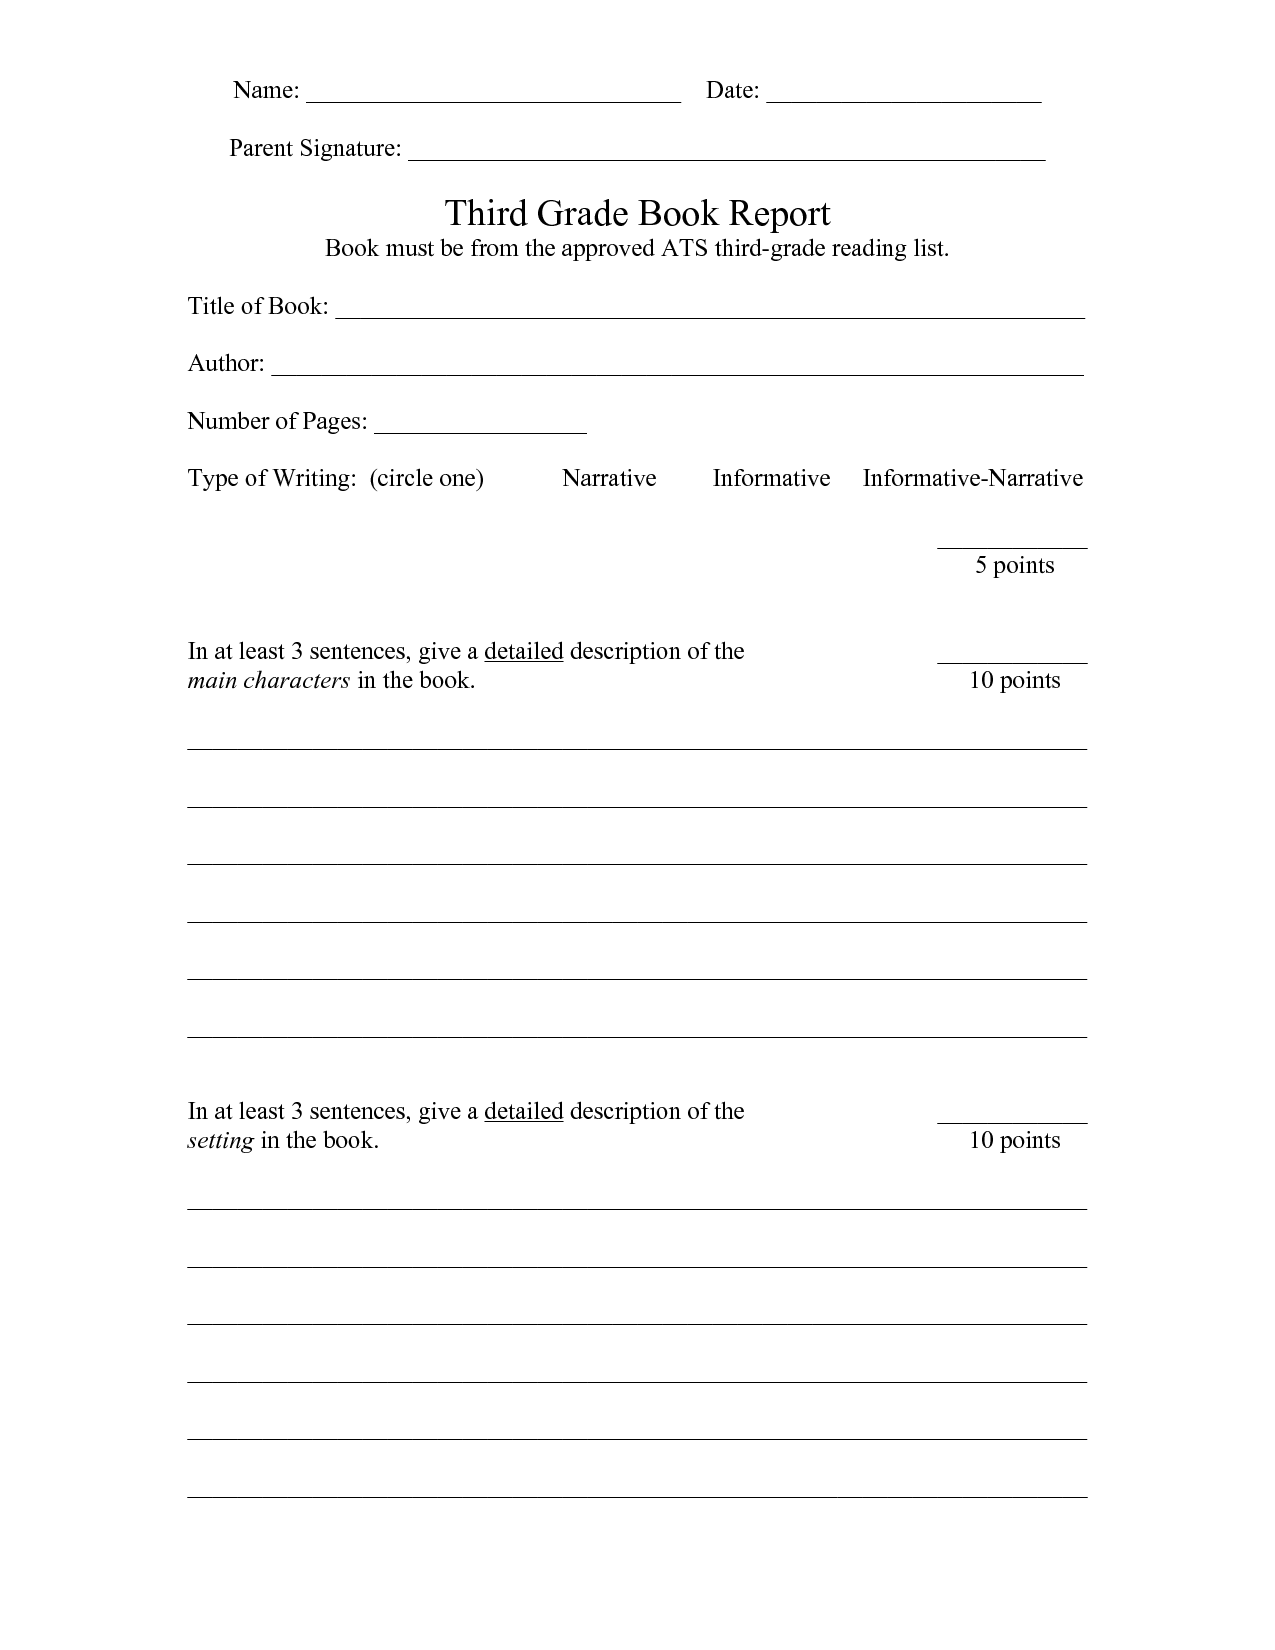 3rd Grade Book Report Format